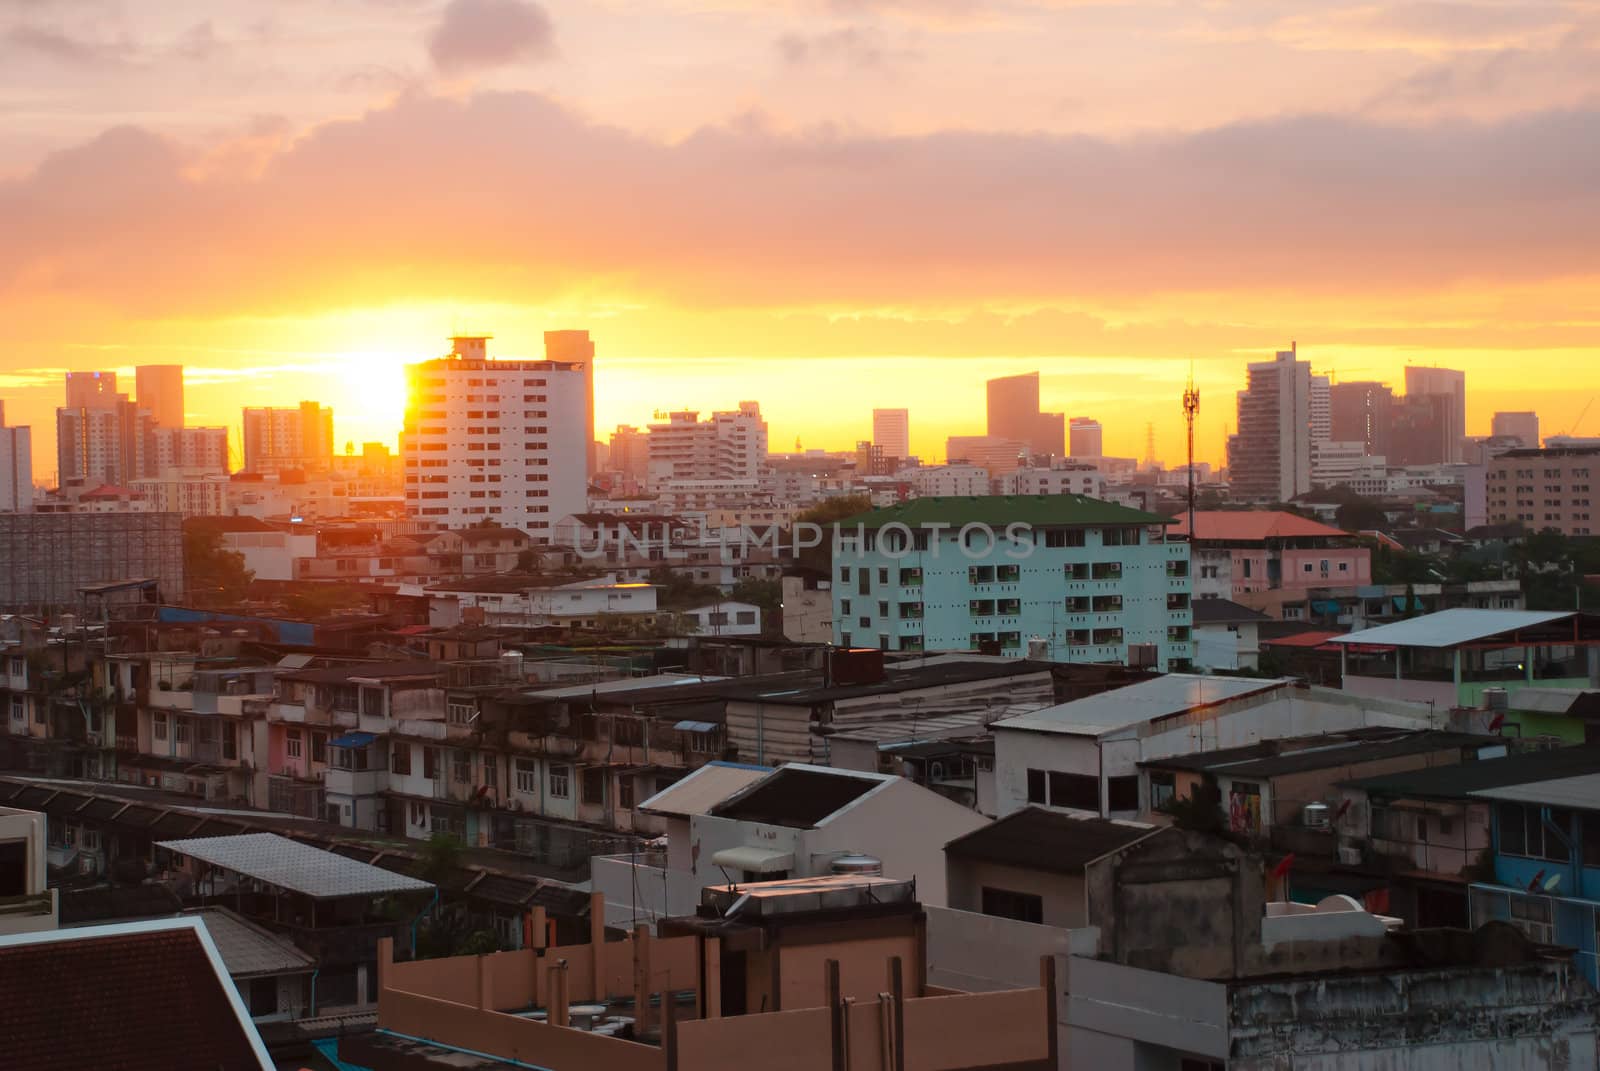 Bangkok skyline in sunset,Thailand







Bangkok skyline in sunset